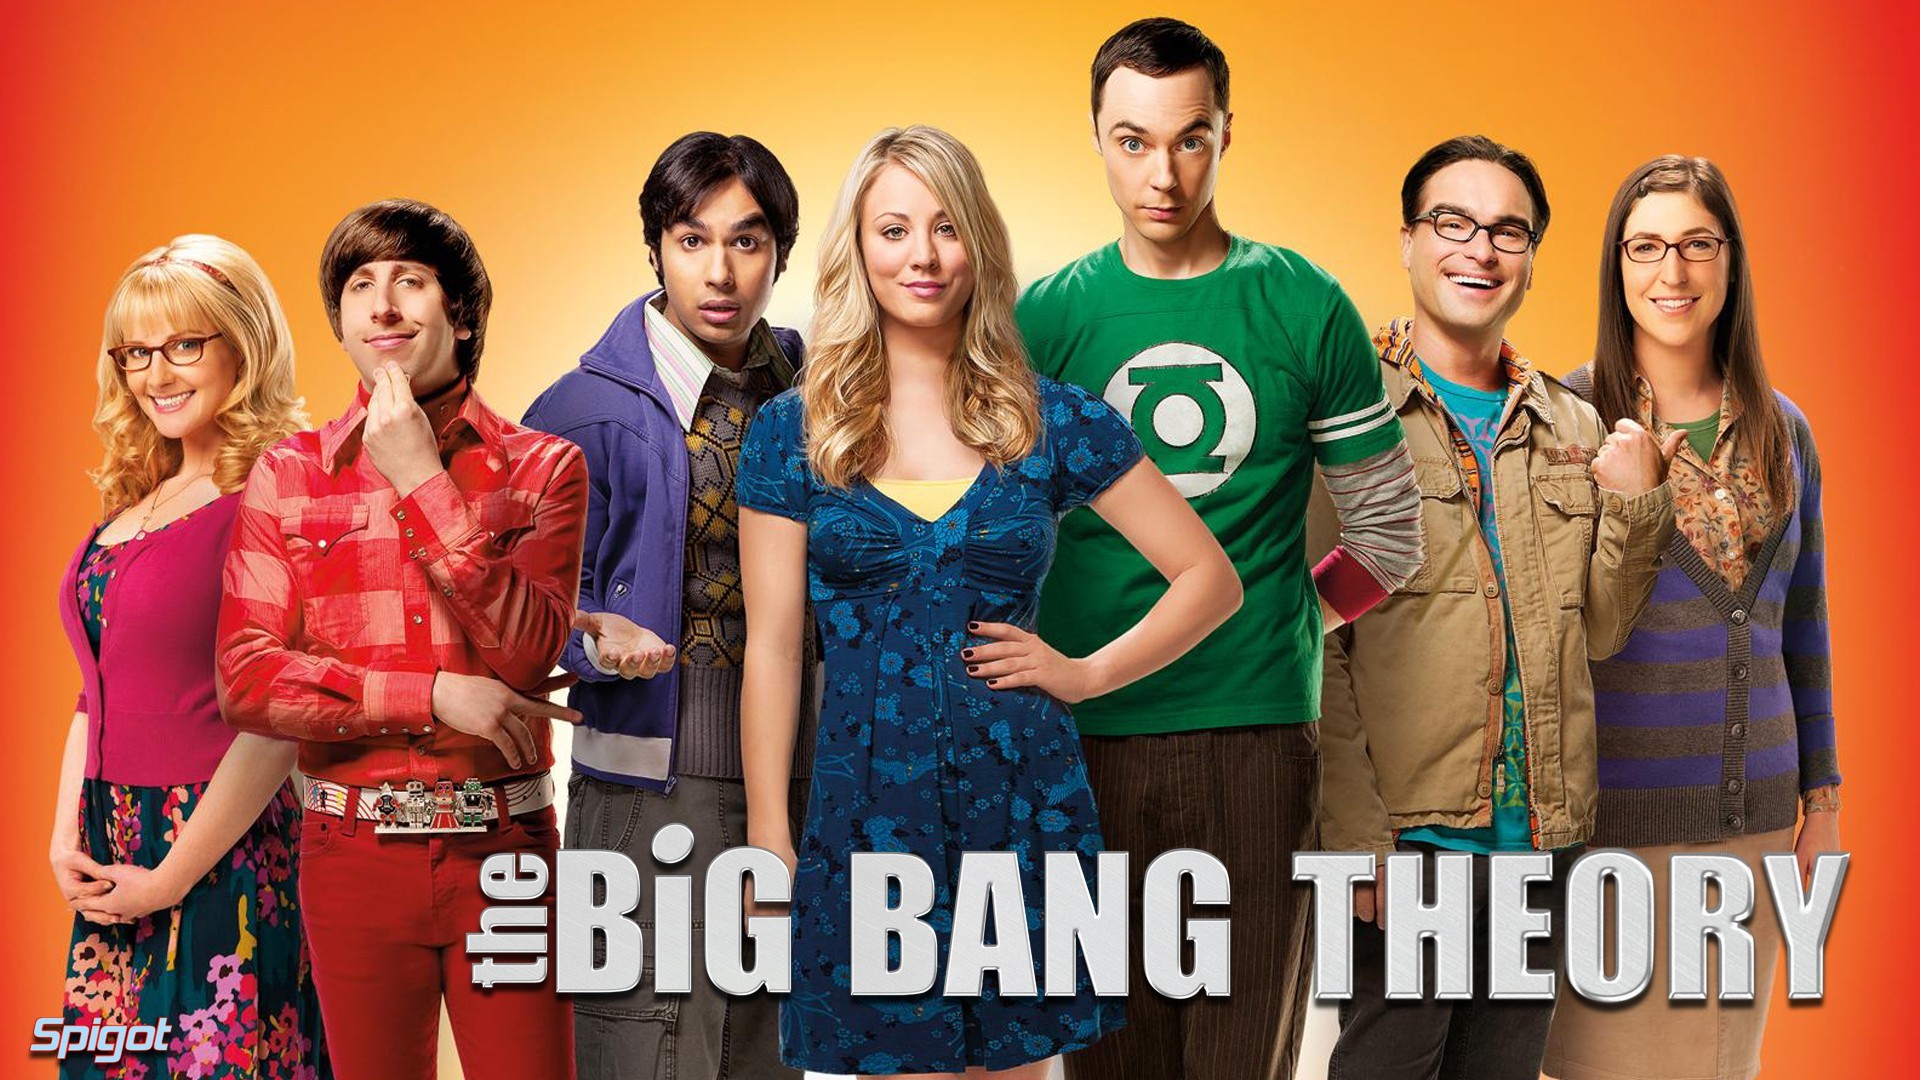 The Big Bang Theory, Sheldon Cooper, Leonard Hofstadter, Penny, Howard Wolowitz, Raj Koothrappali, Amy Farrah Fowler, Bernadette Rostenkowski, Mayim Bialik Wallpaper